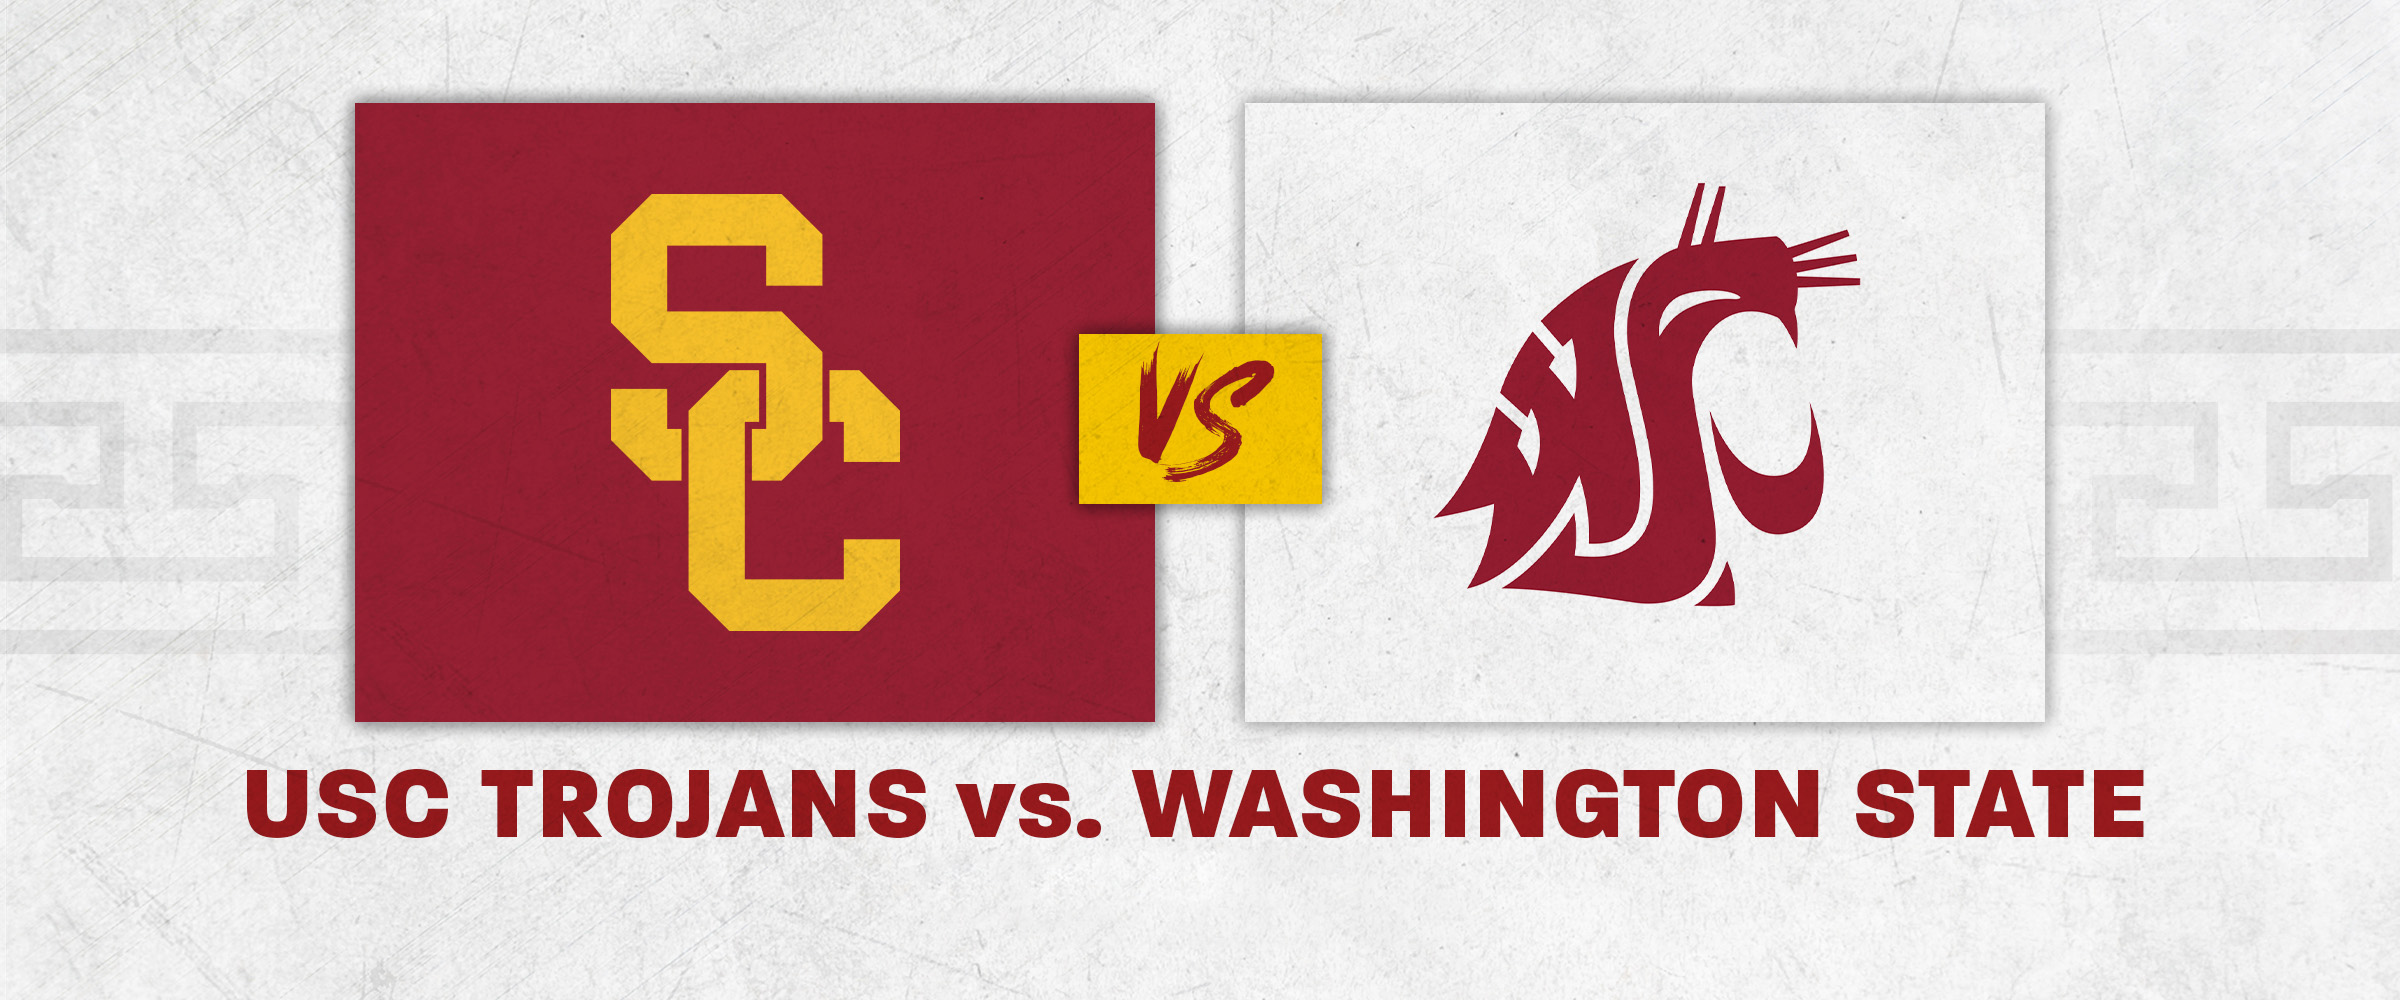 USC vs Washington St.